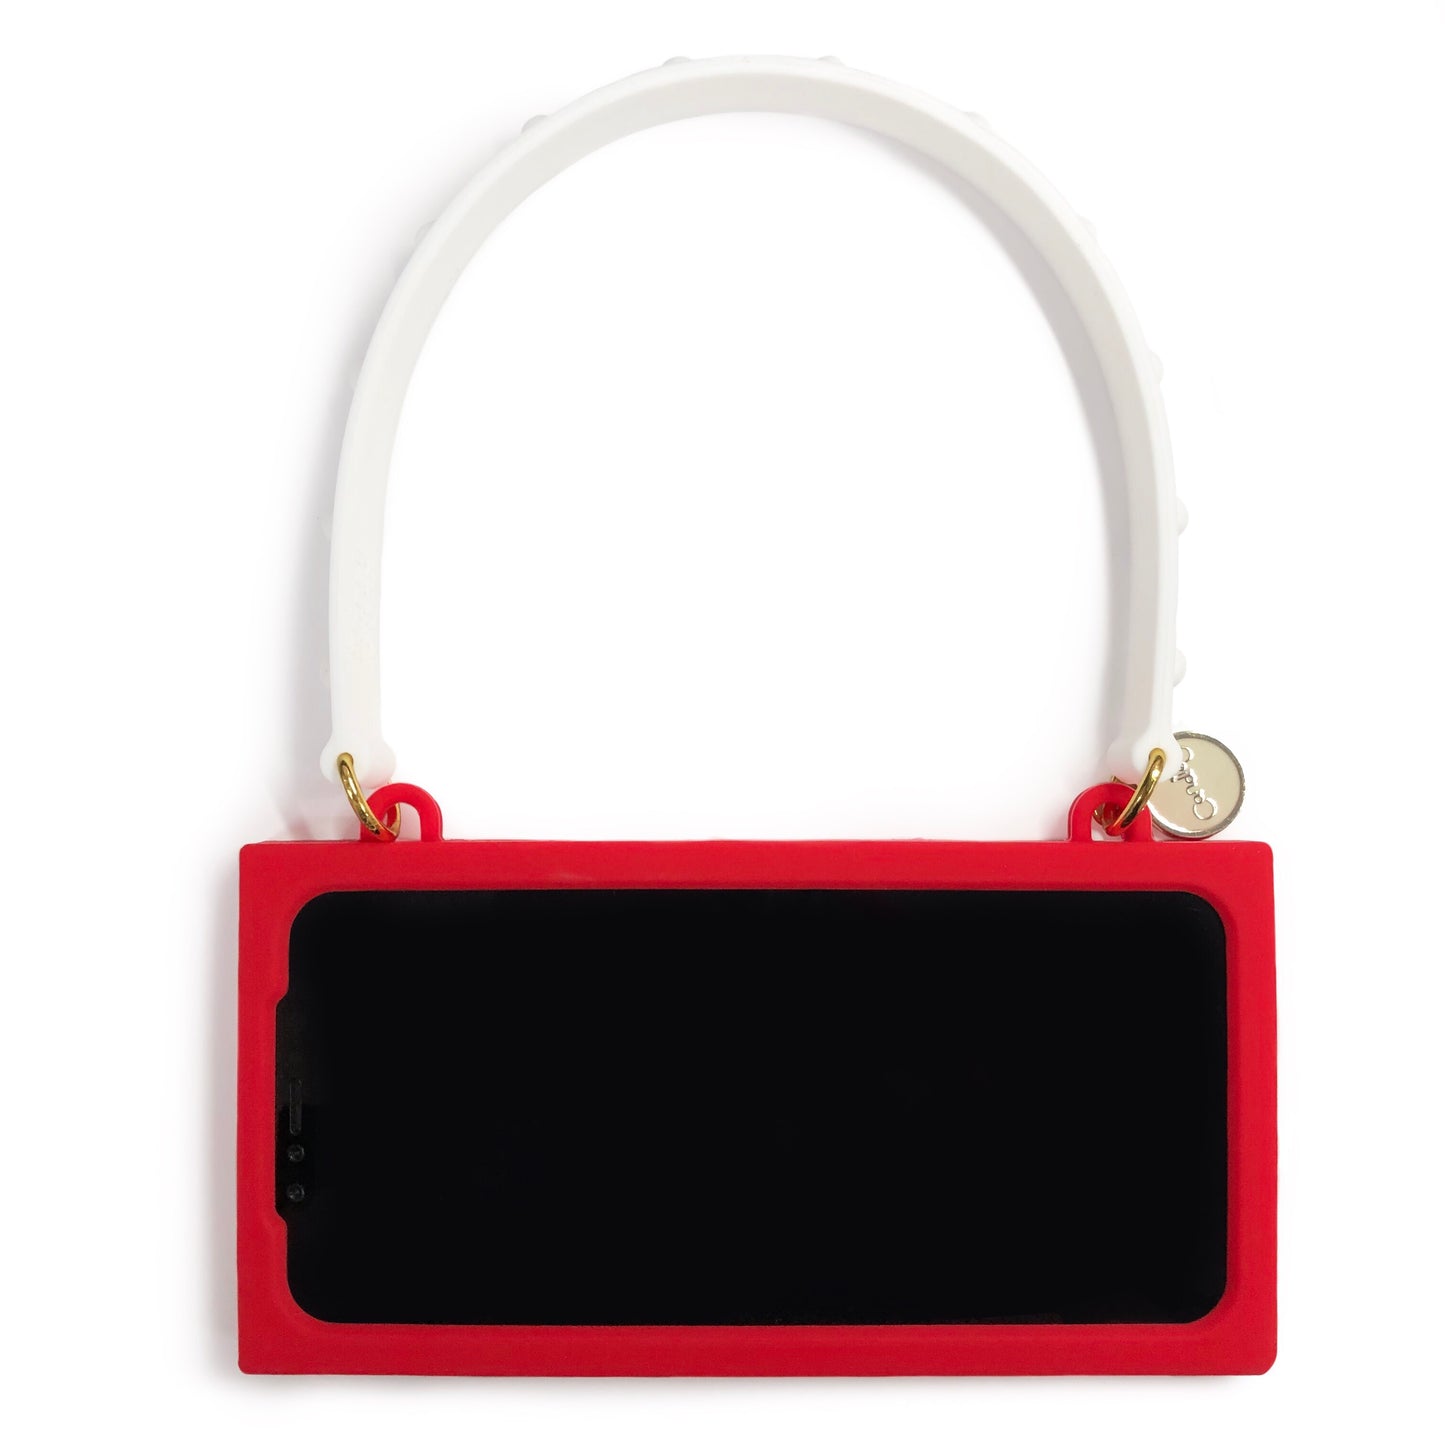 iPhone XS Max Parody Handbag Case - Sunny 24 Hours